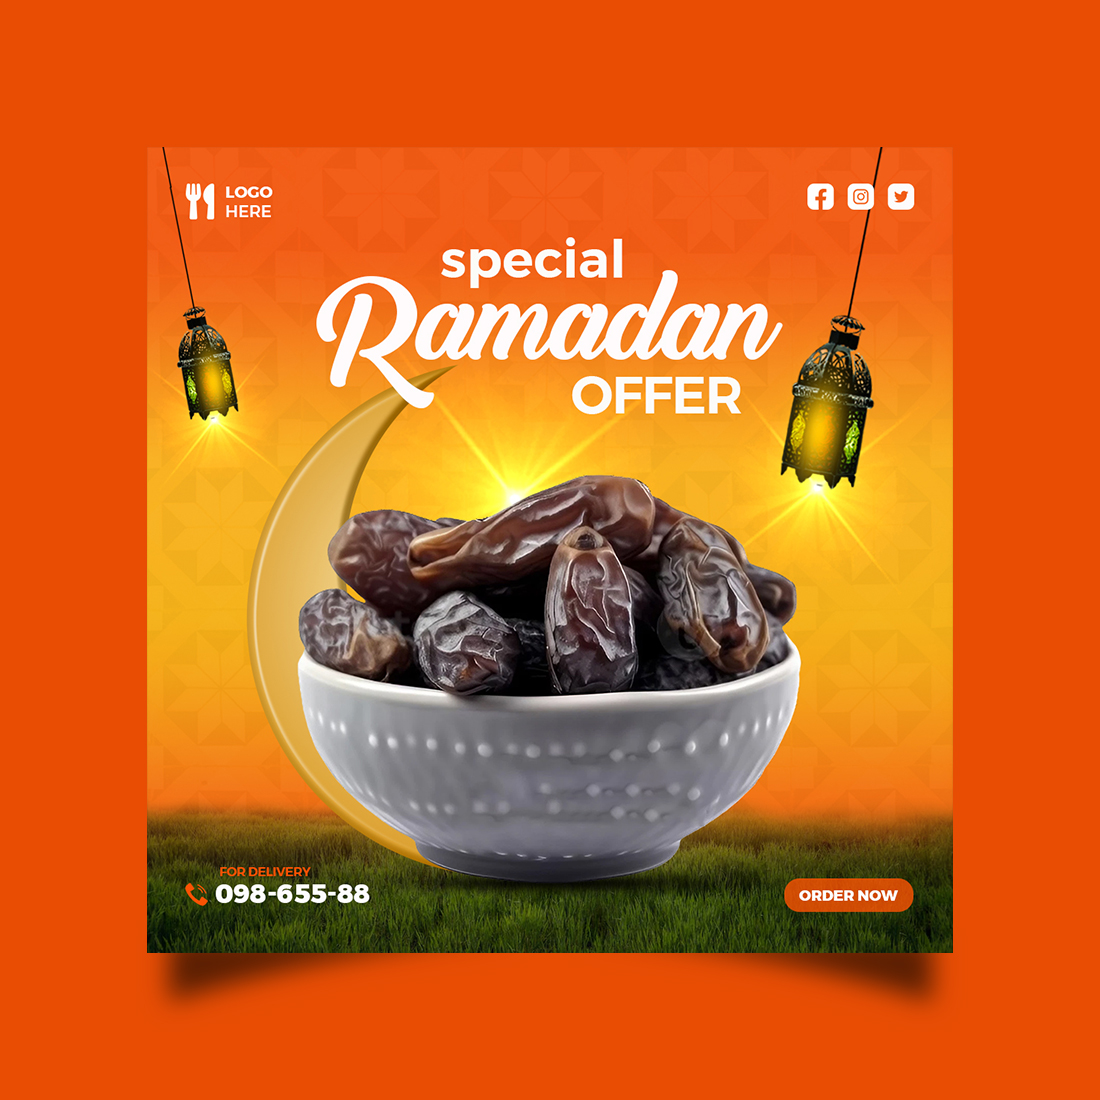 Ramadan Social Media Design preview image.